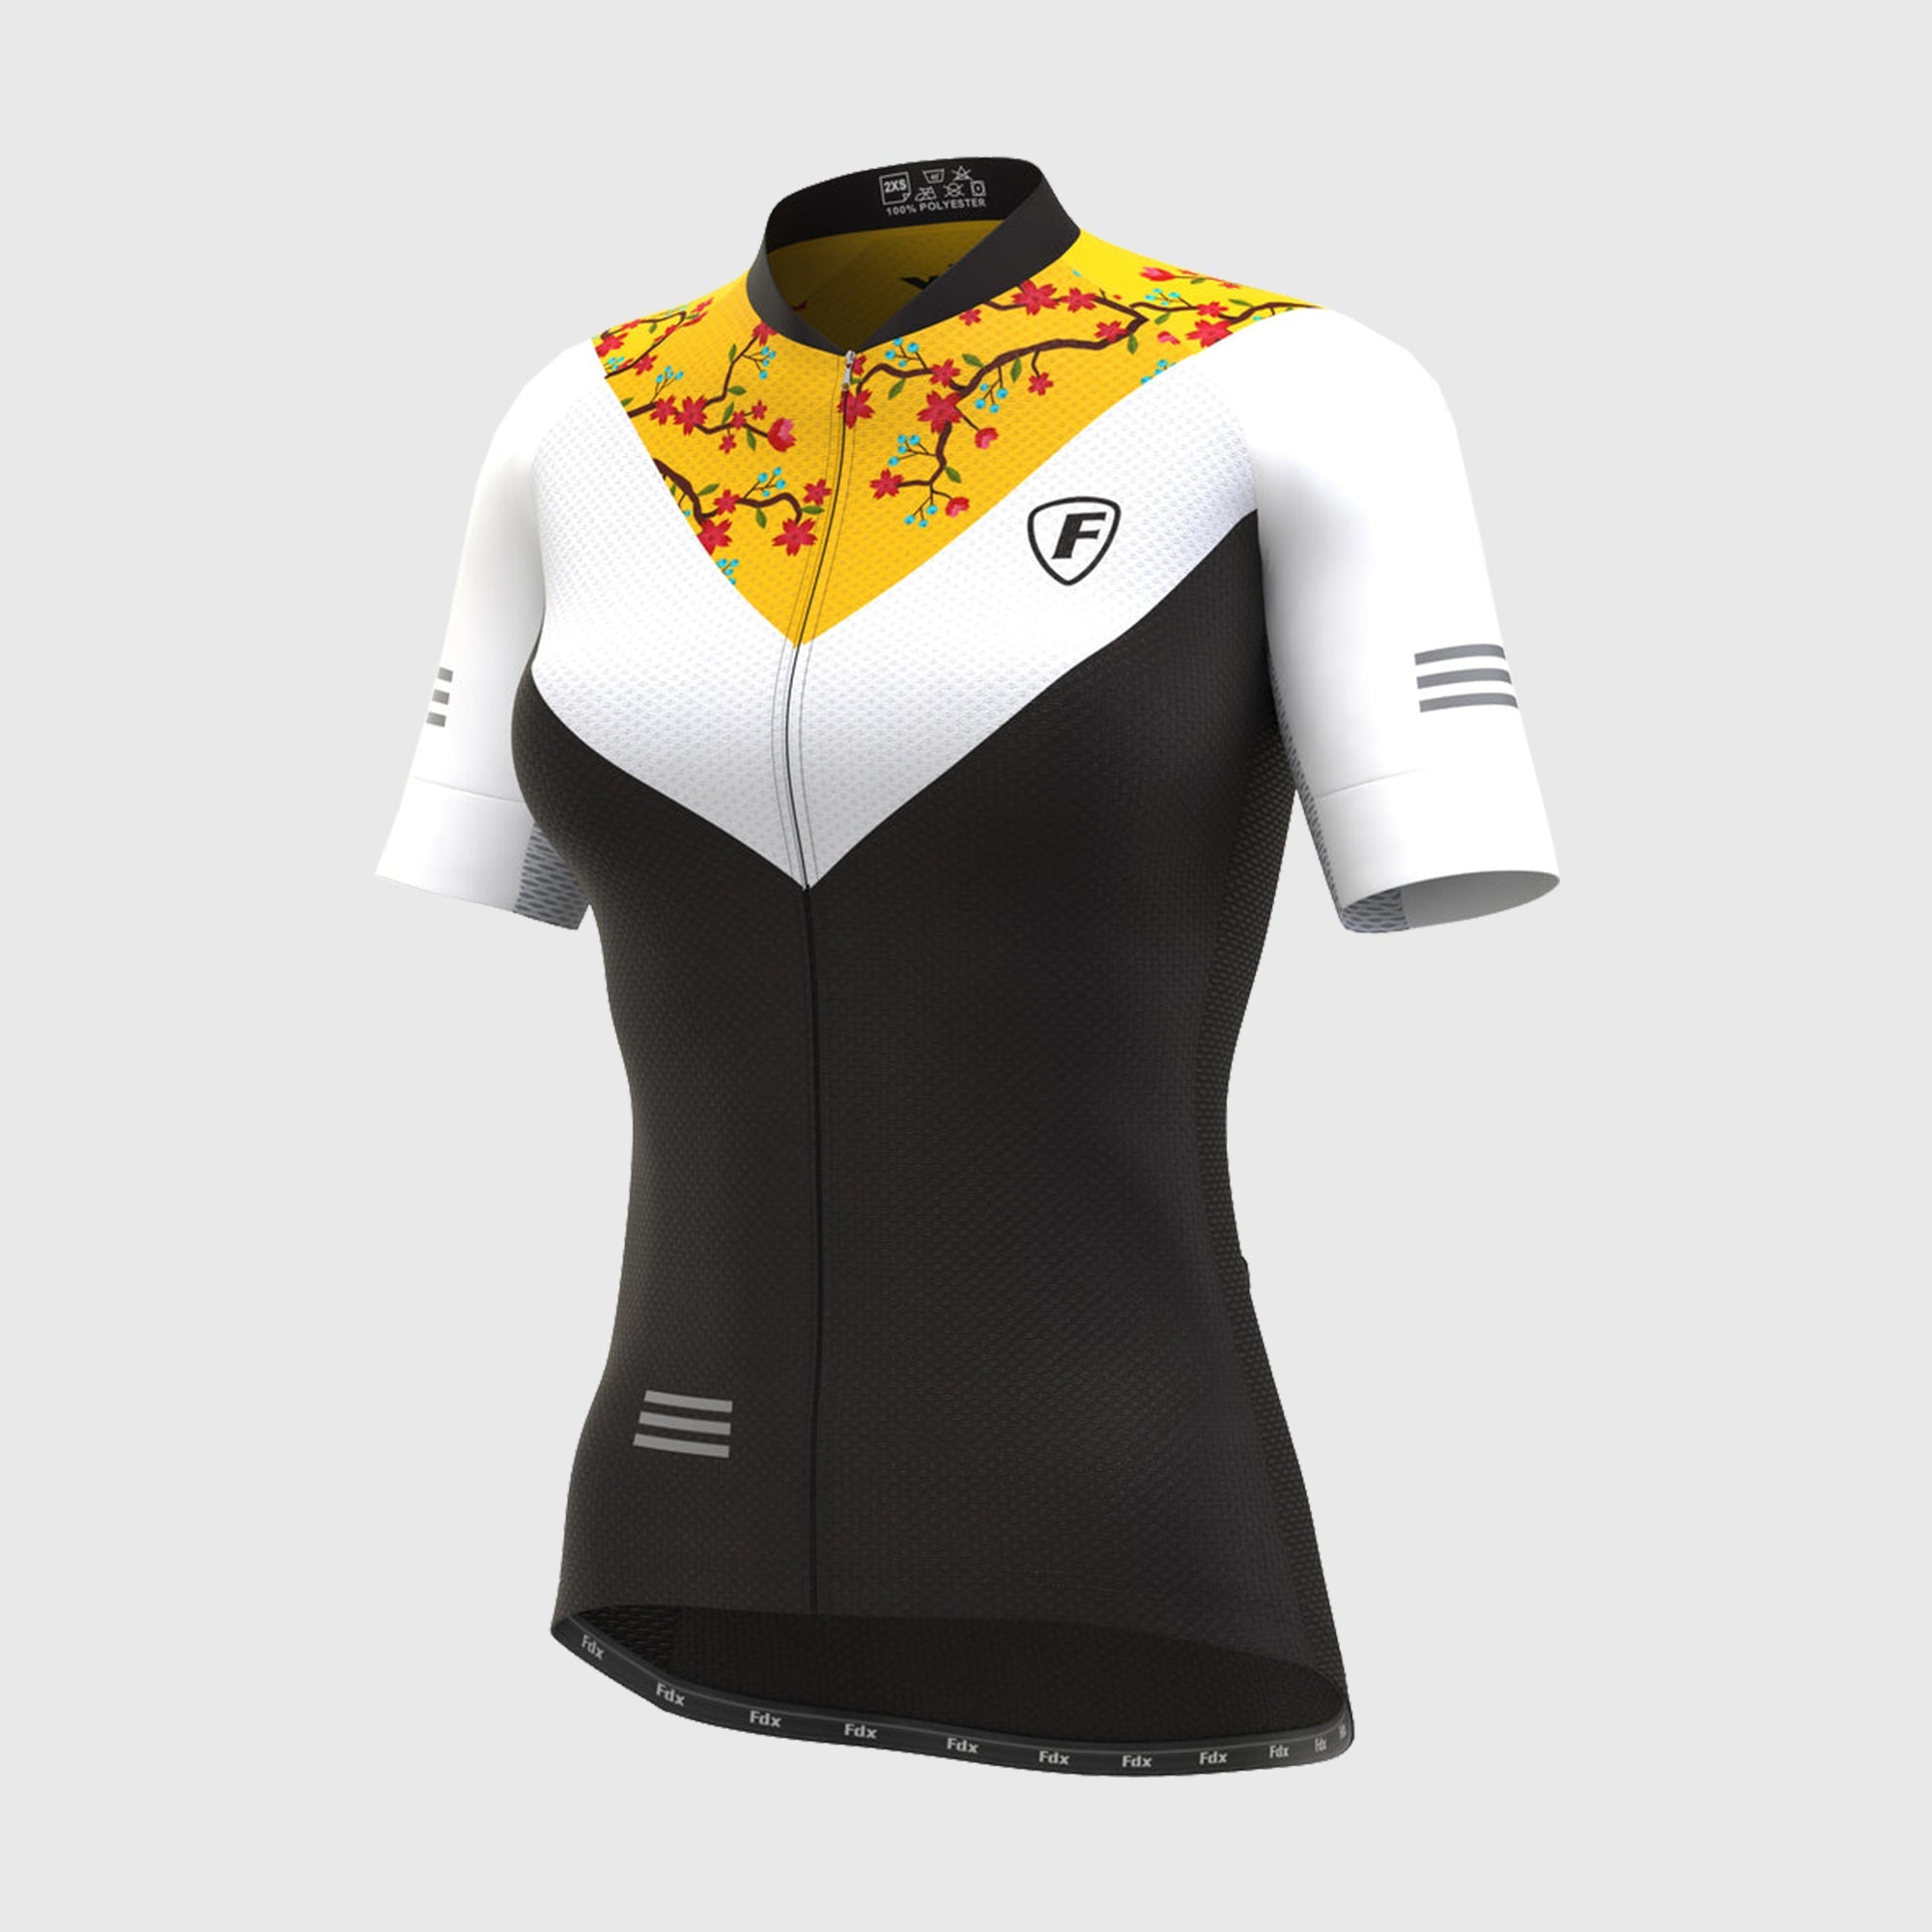 Fdx Women's Yellow, Black & White Short Sleeve Cycling Jersey Breathable Quick Dry Mesh Fleece Full Zip Hi Viz Reflectors & Pockets Summer Cycling Gear UK